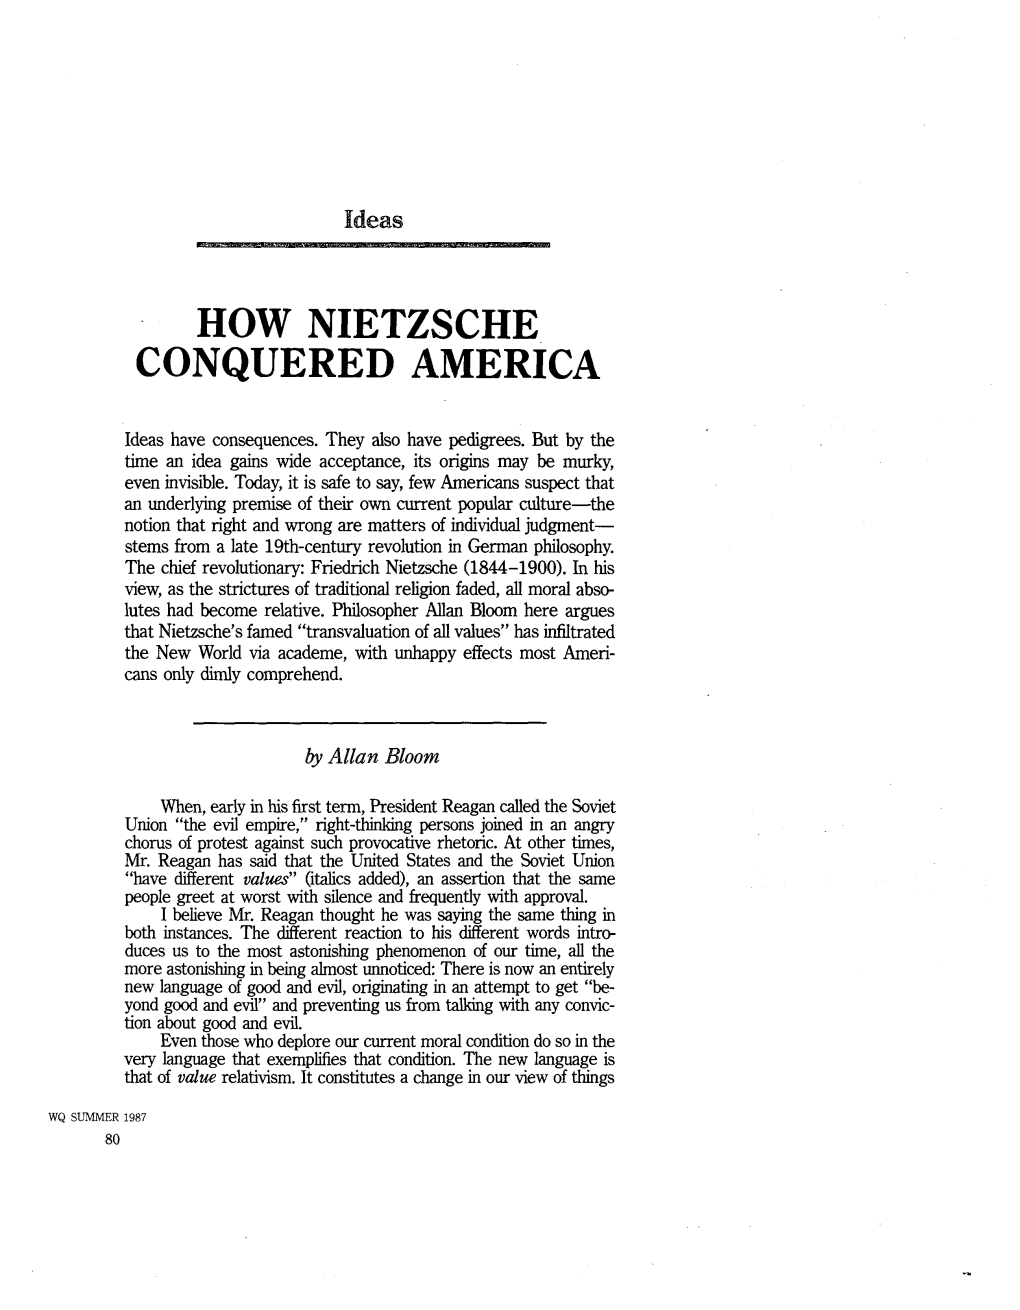 How Nietzsche Conquered America